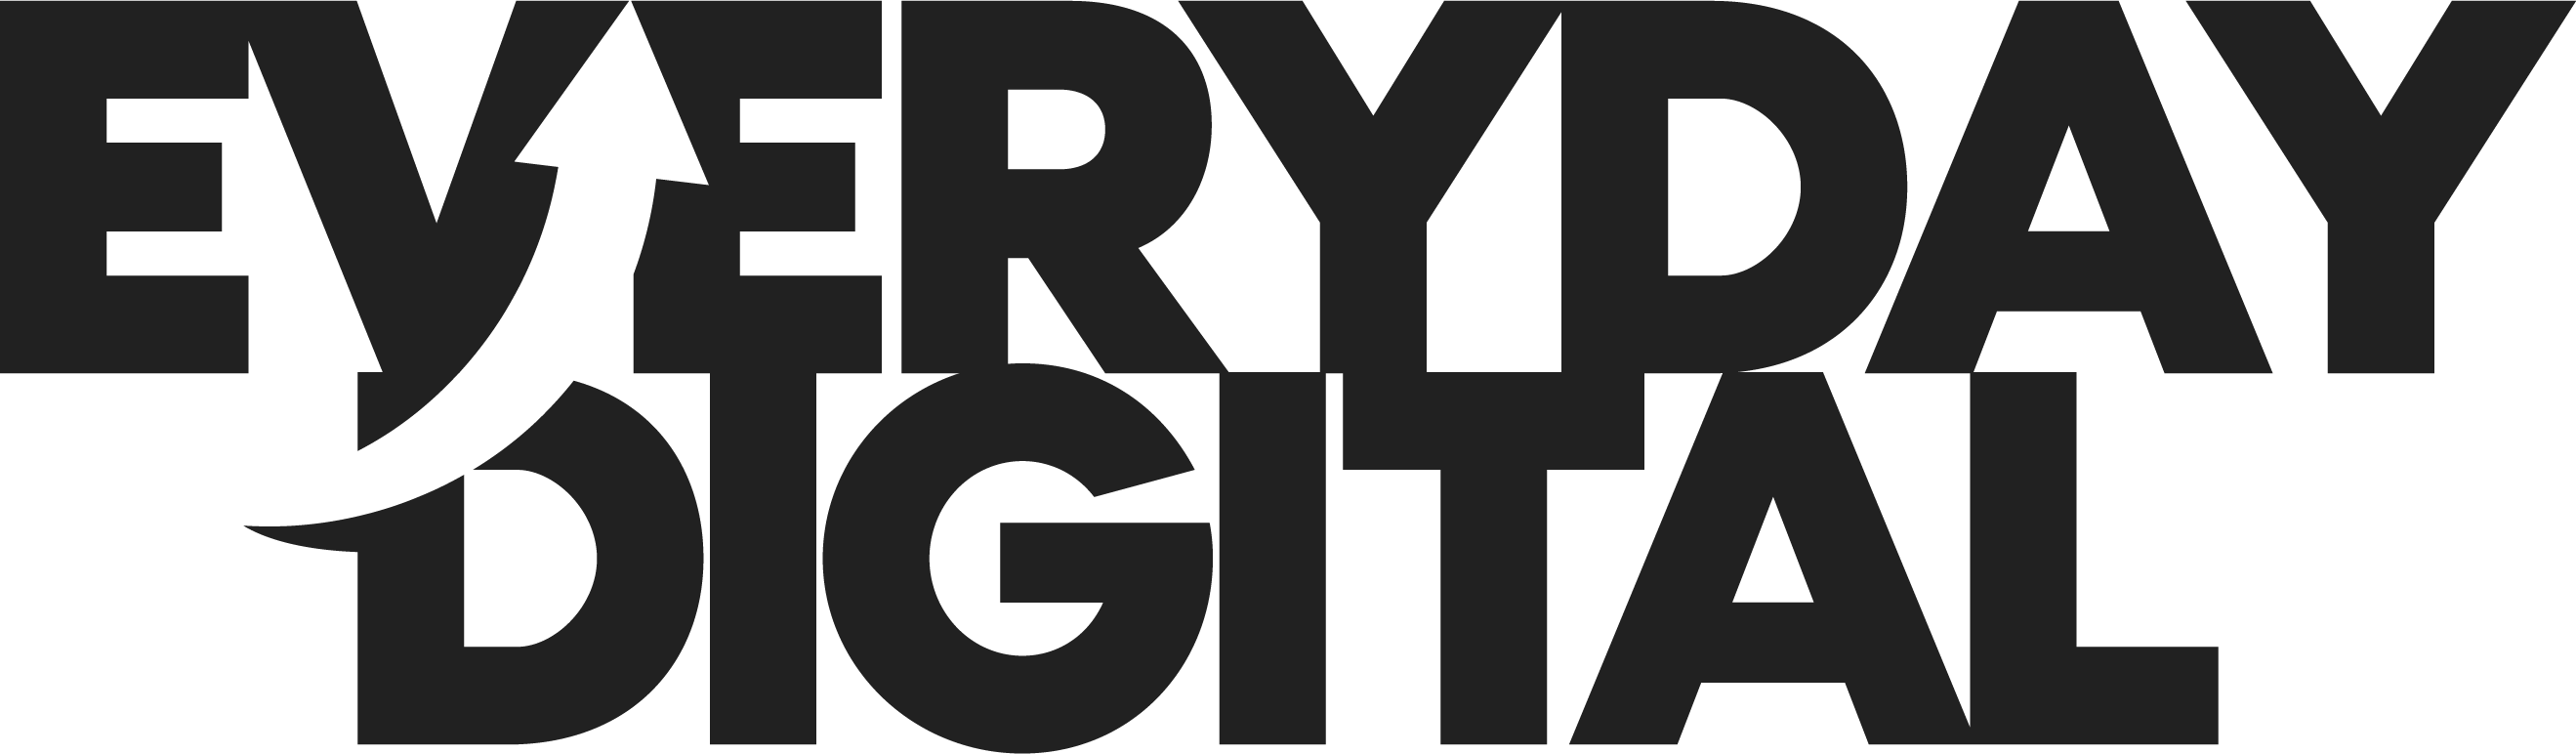 Everyday Digital Logo Black